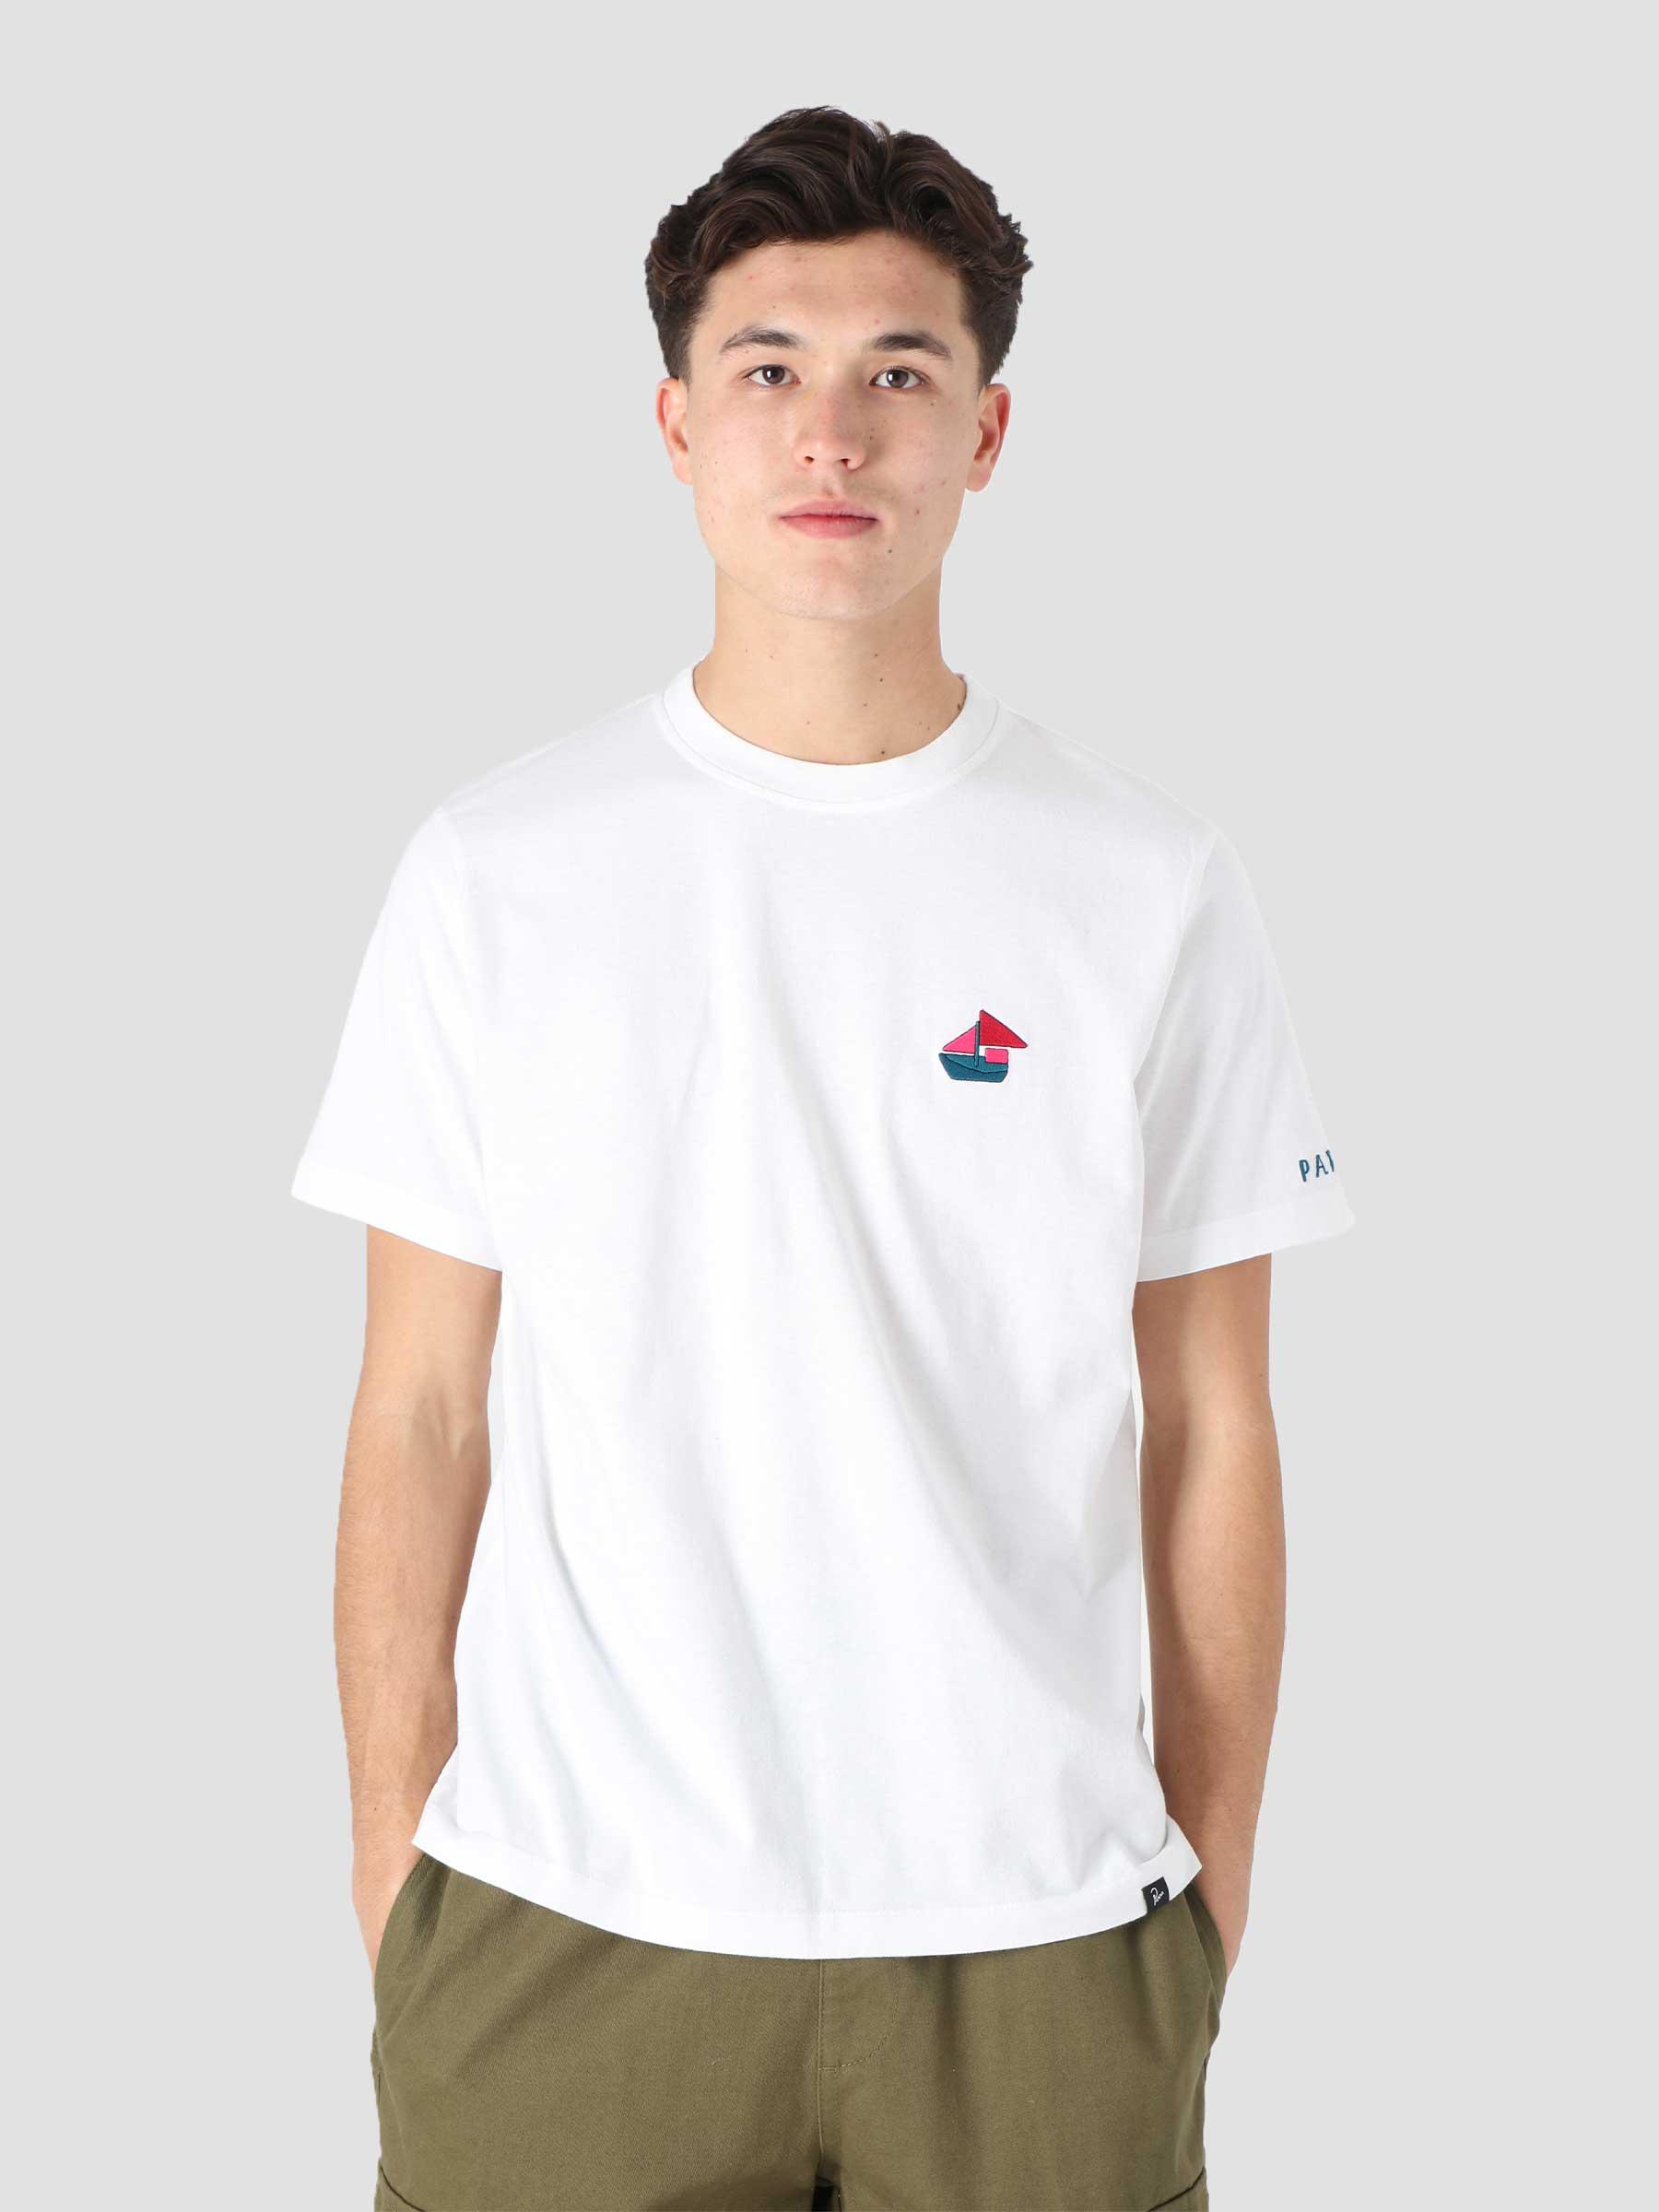 Paper Boat House T-Shirt White 46500